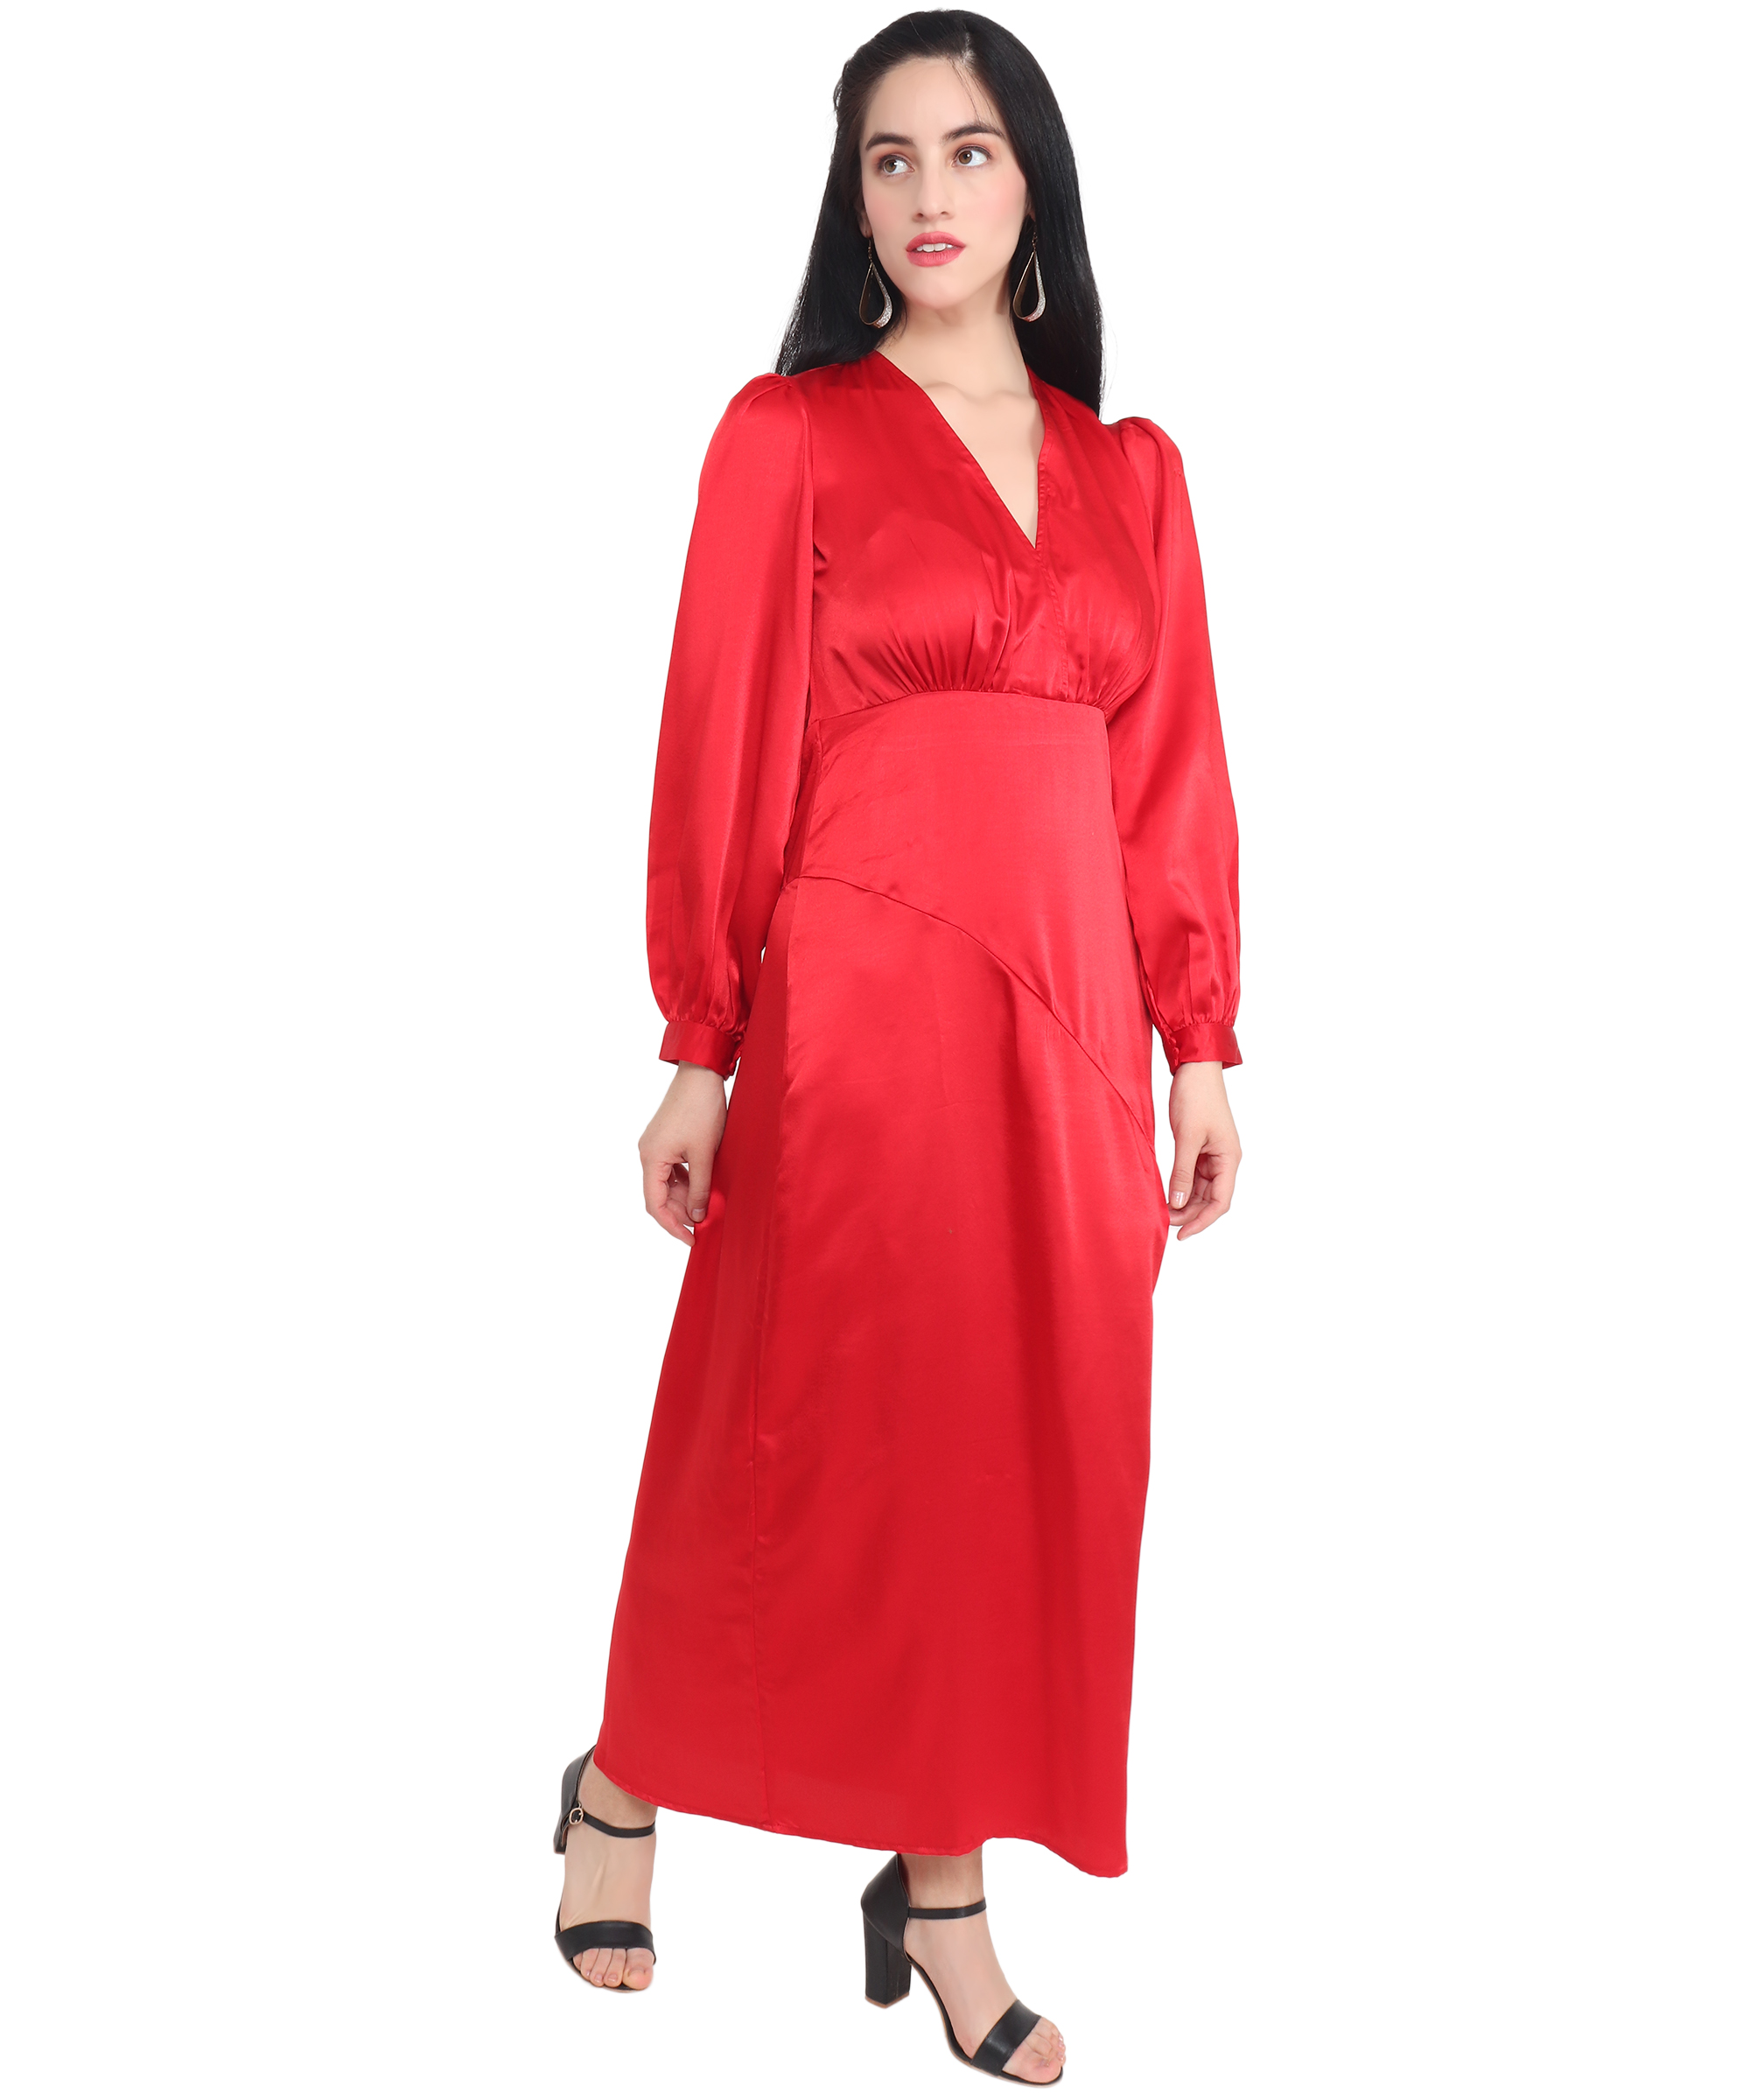 Women's Maxi Dress Plain Satin Red Dress - AUDRAPE